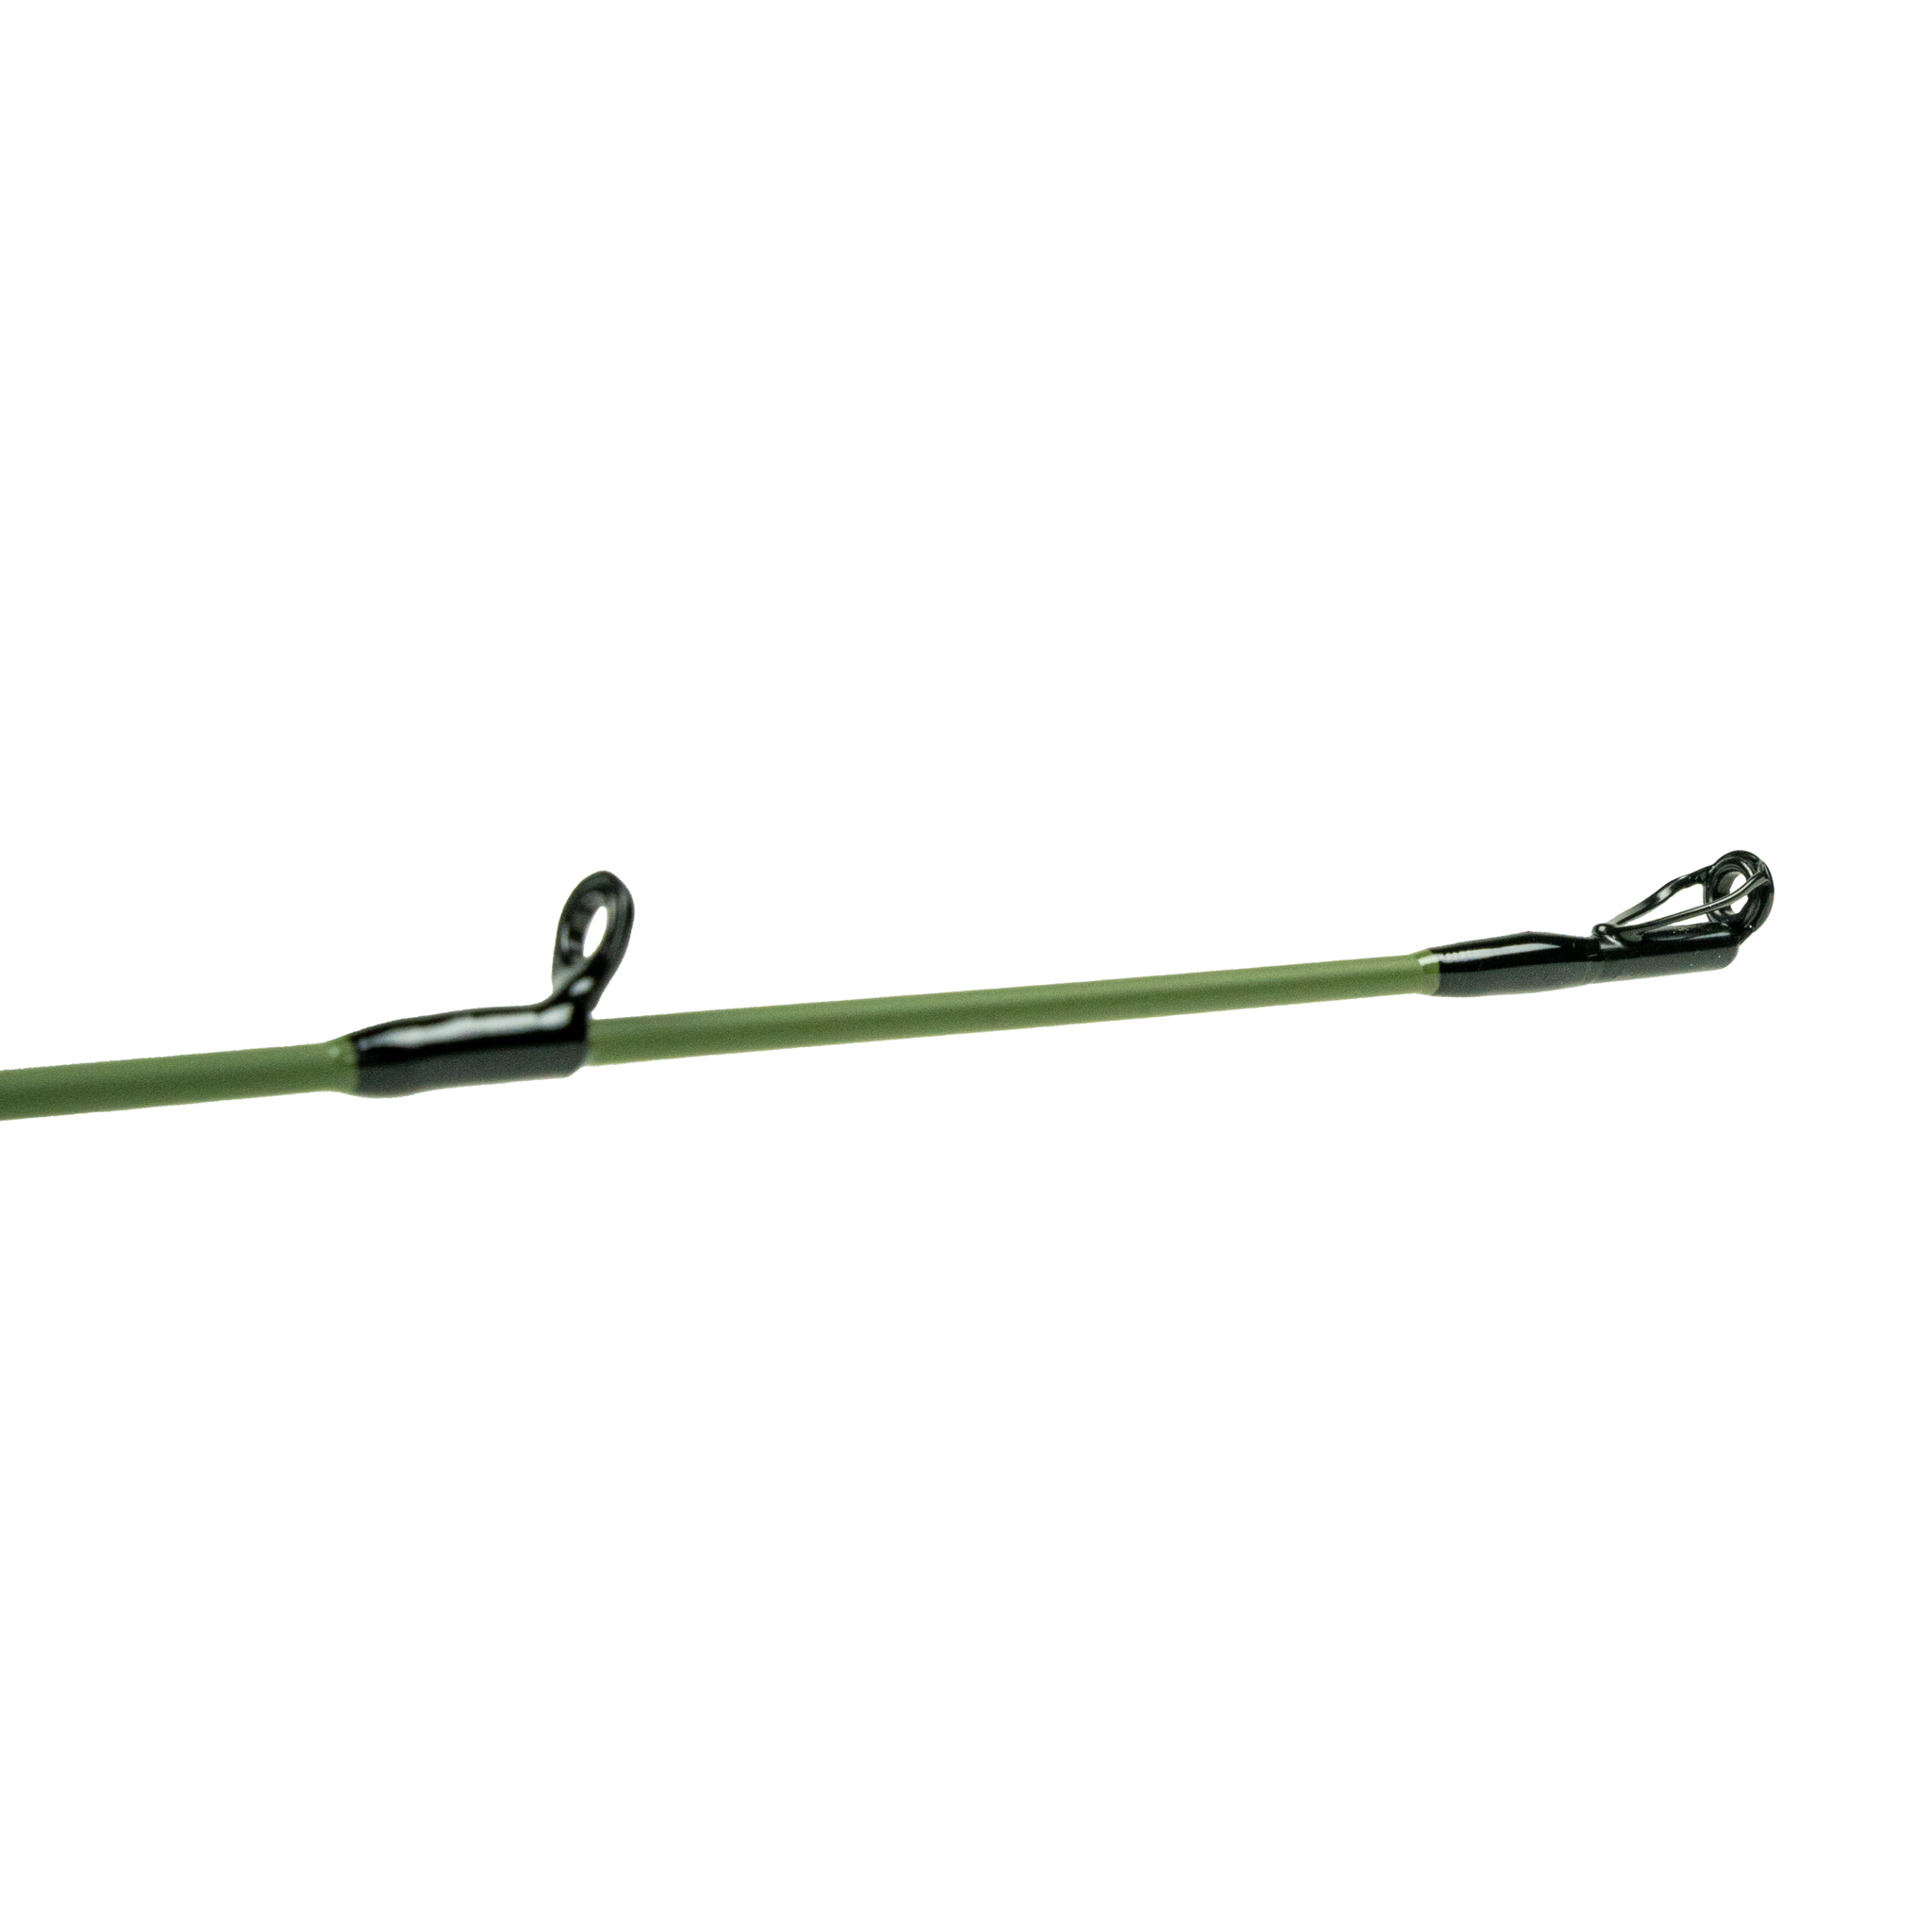 6th Sense Fishing - Stache Stick Rod Series - 6'6 Med-Light, Fast